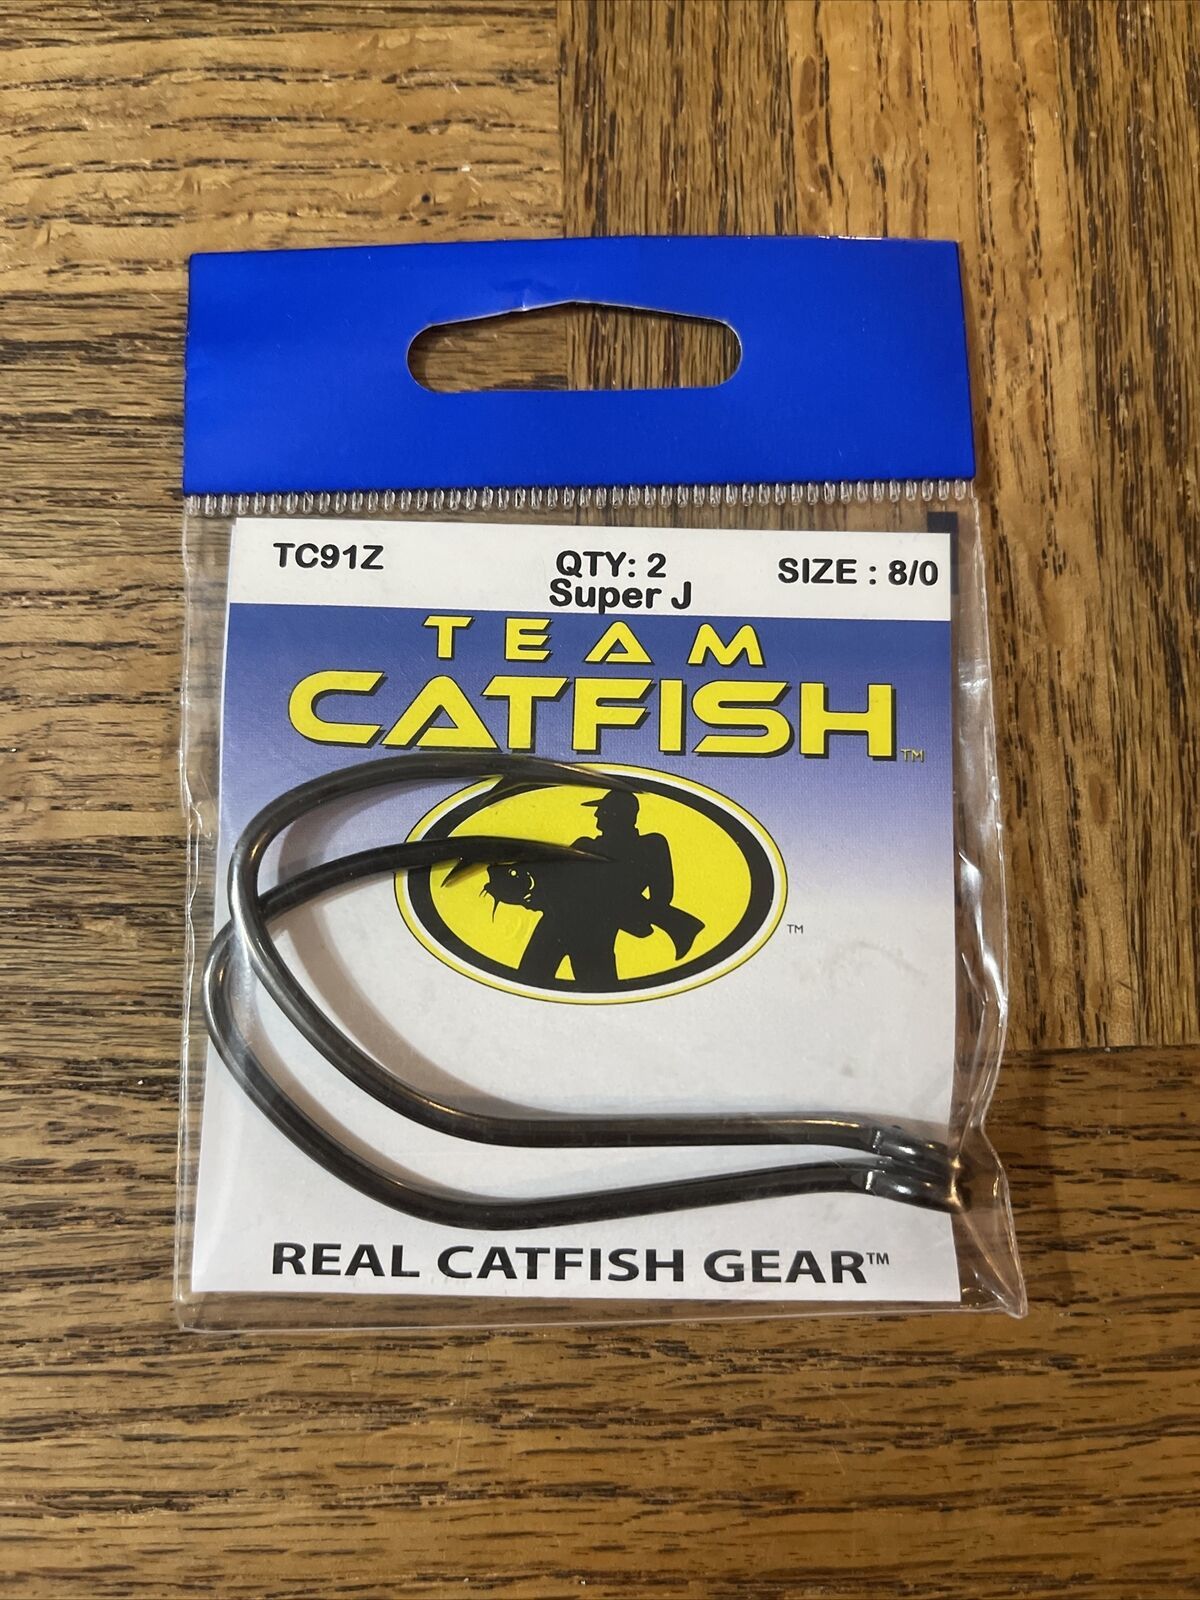 Primary image for Team Catfish Super J Hook Size 8/0